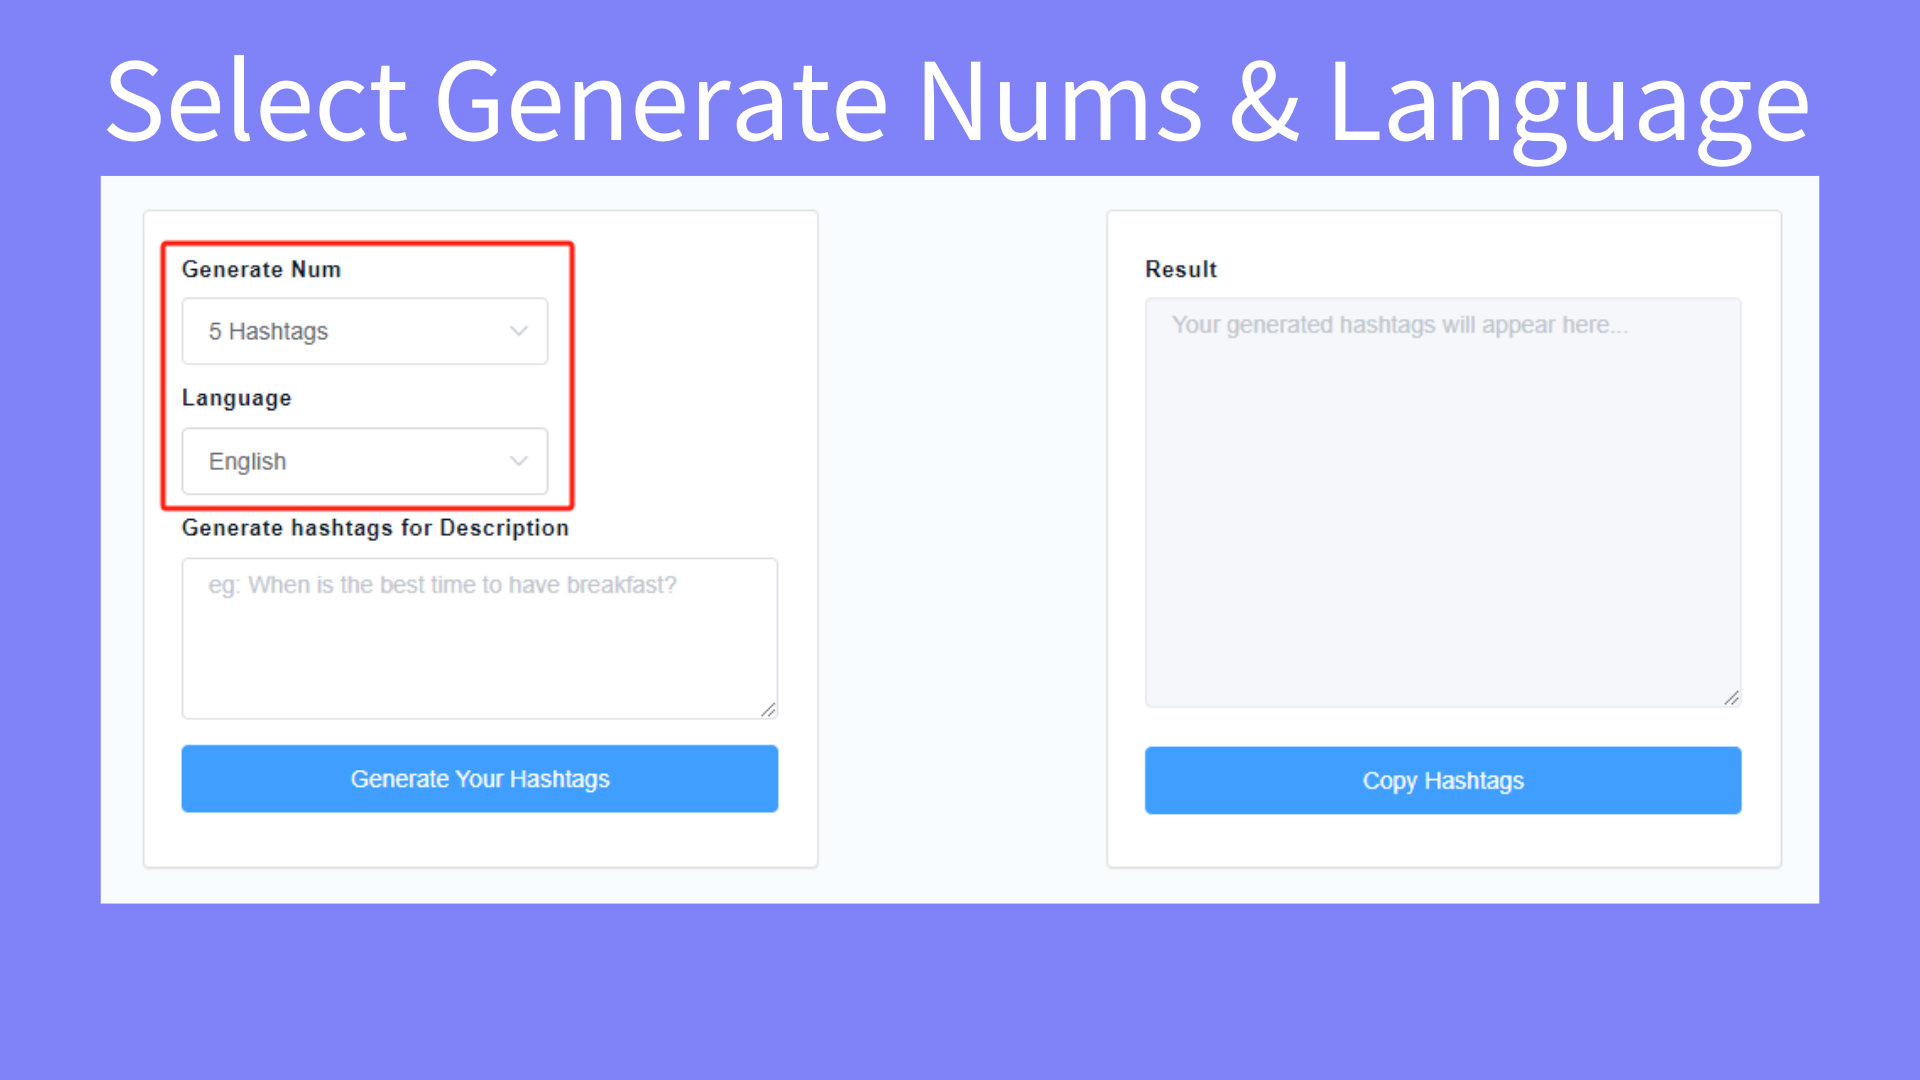 Select Generate Nums & Language